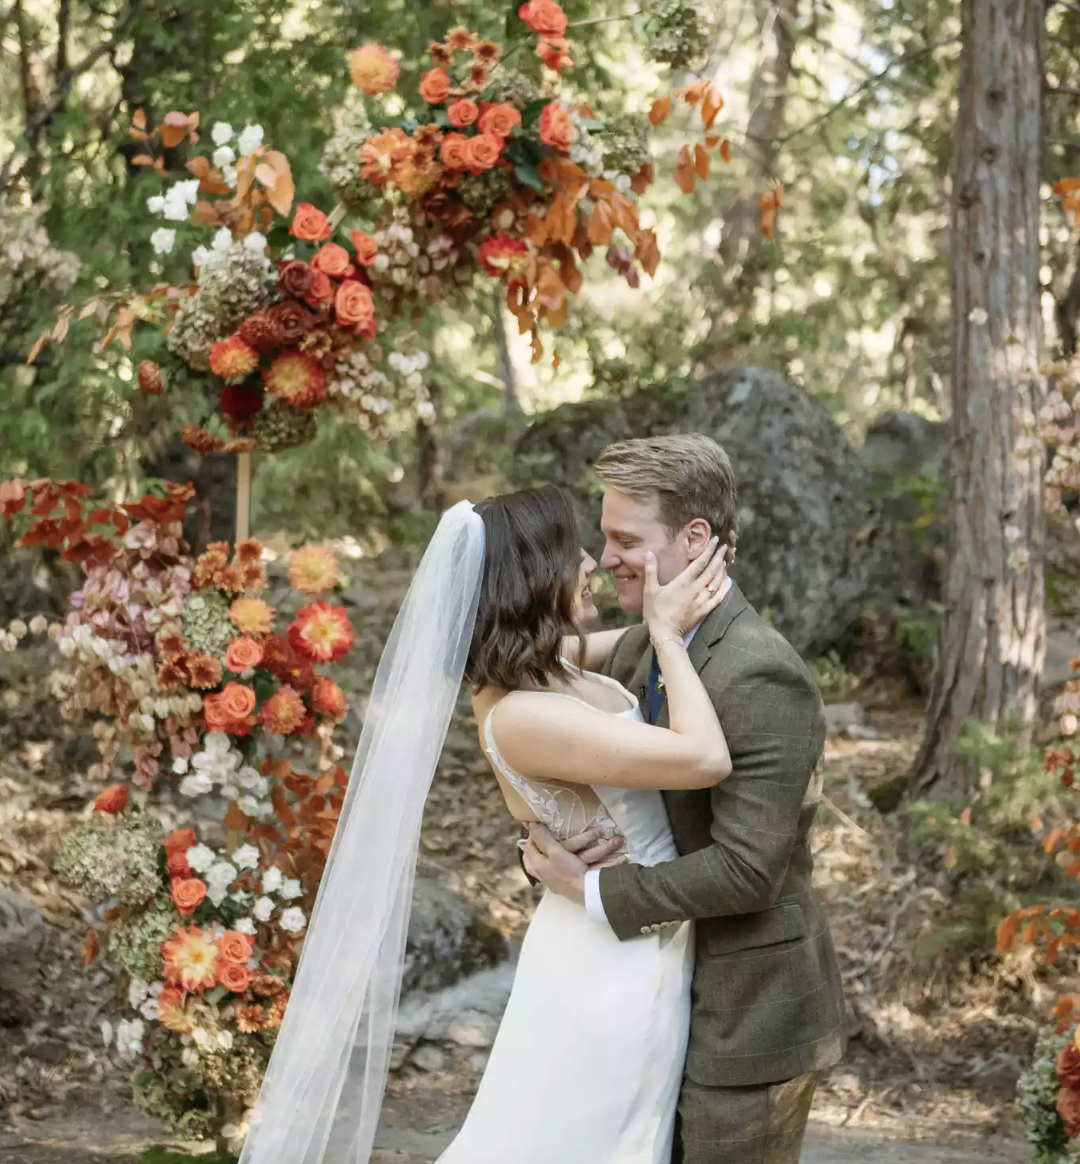 An Autumnal Woodland Wedding in Yosemite